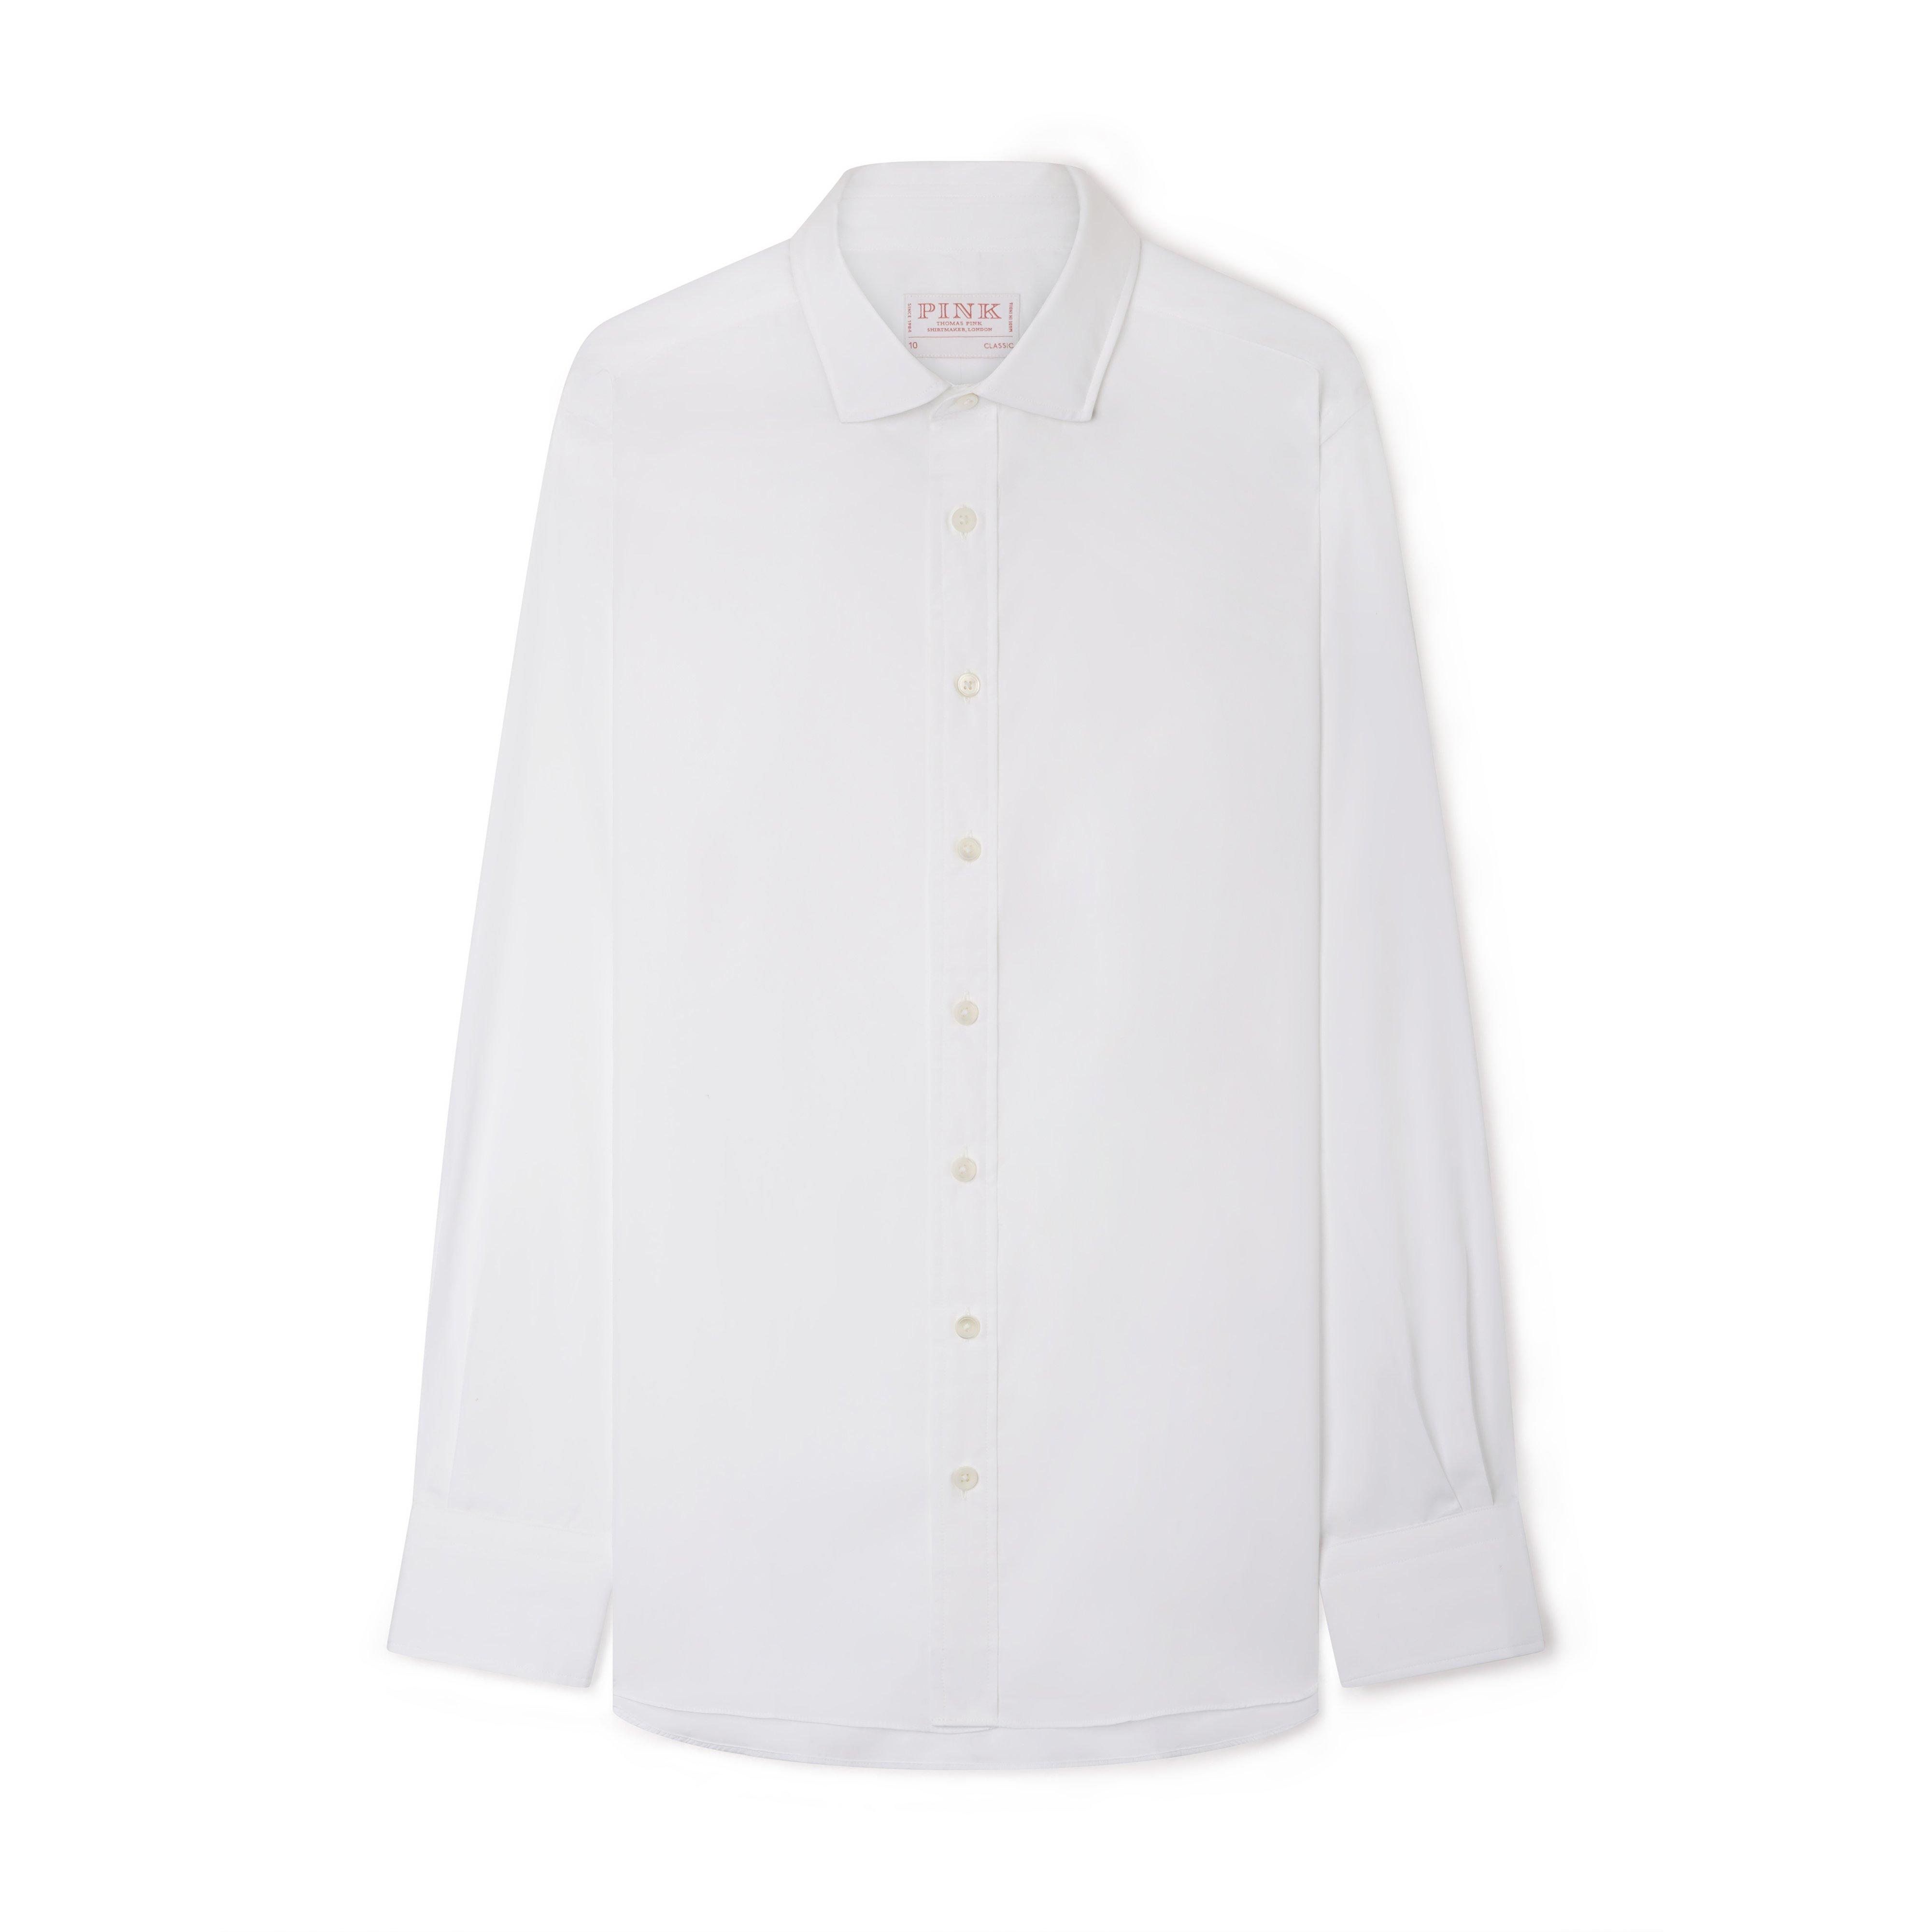 Thomas Pink Womens Jermyn Street London Button Down Shirt Long Sleeve 12 New